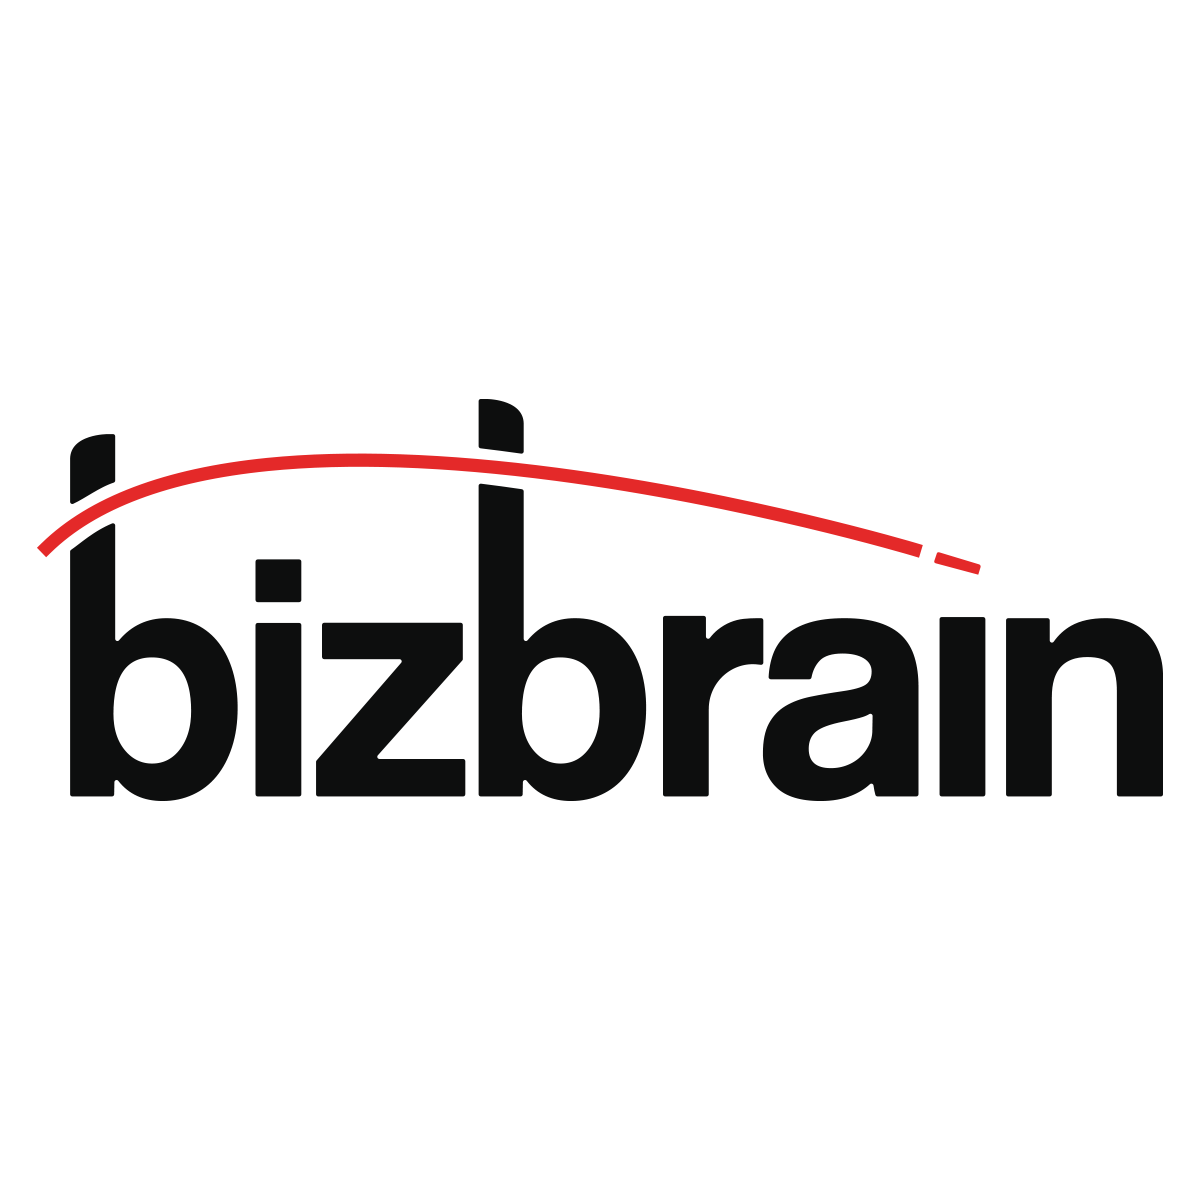 Bizbrain Technologies